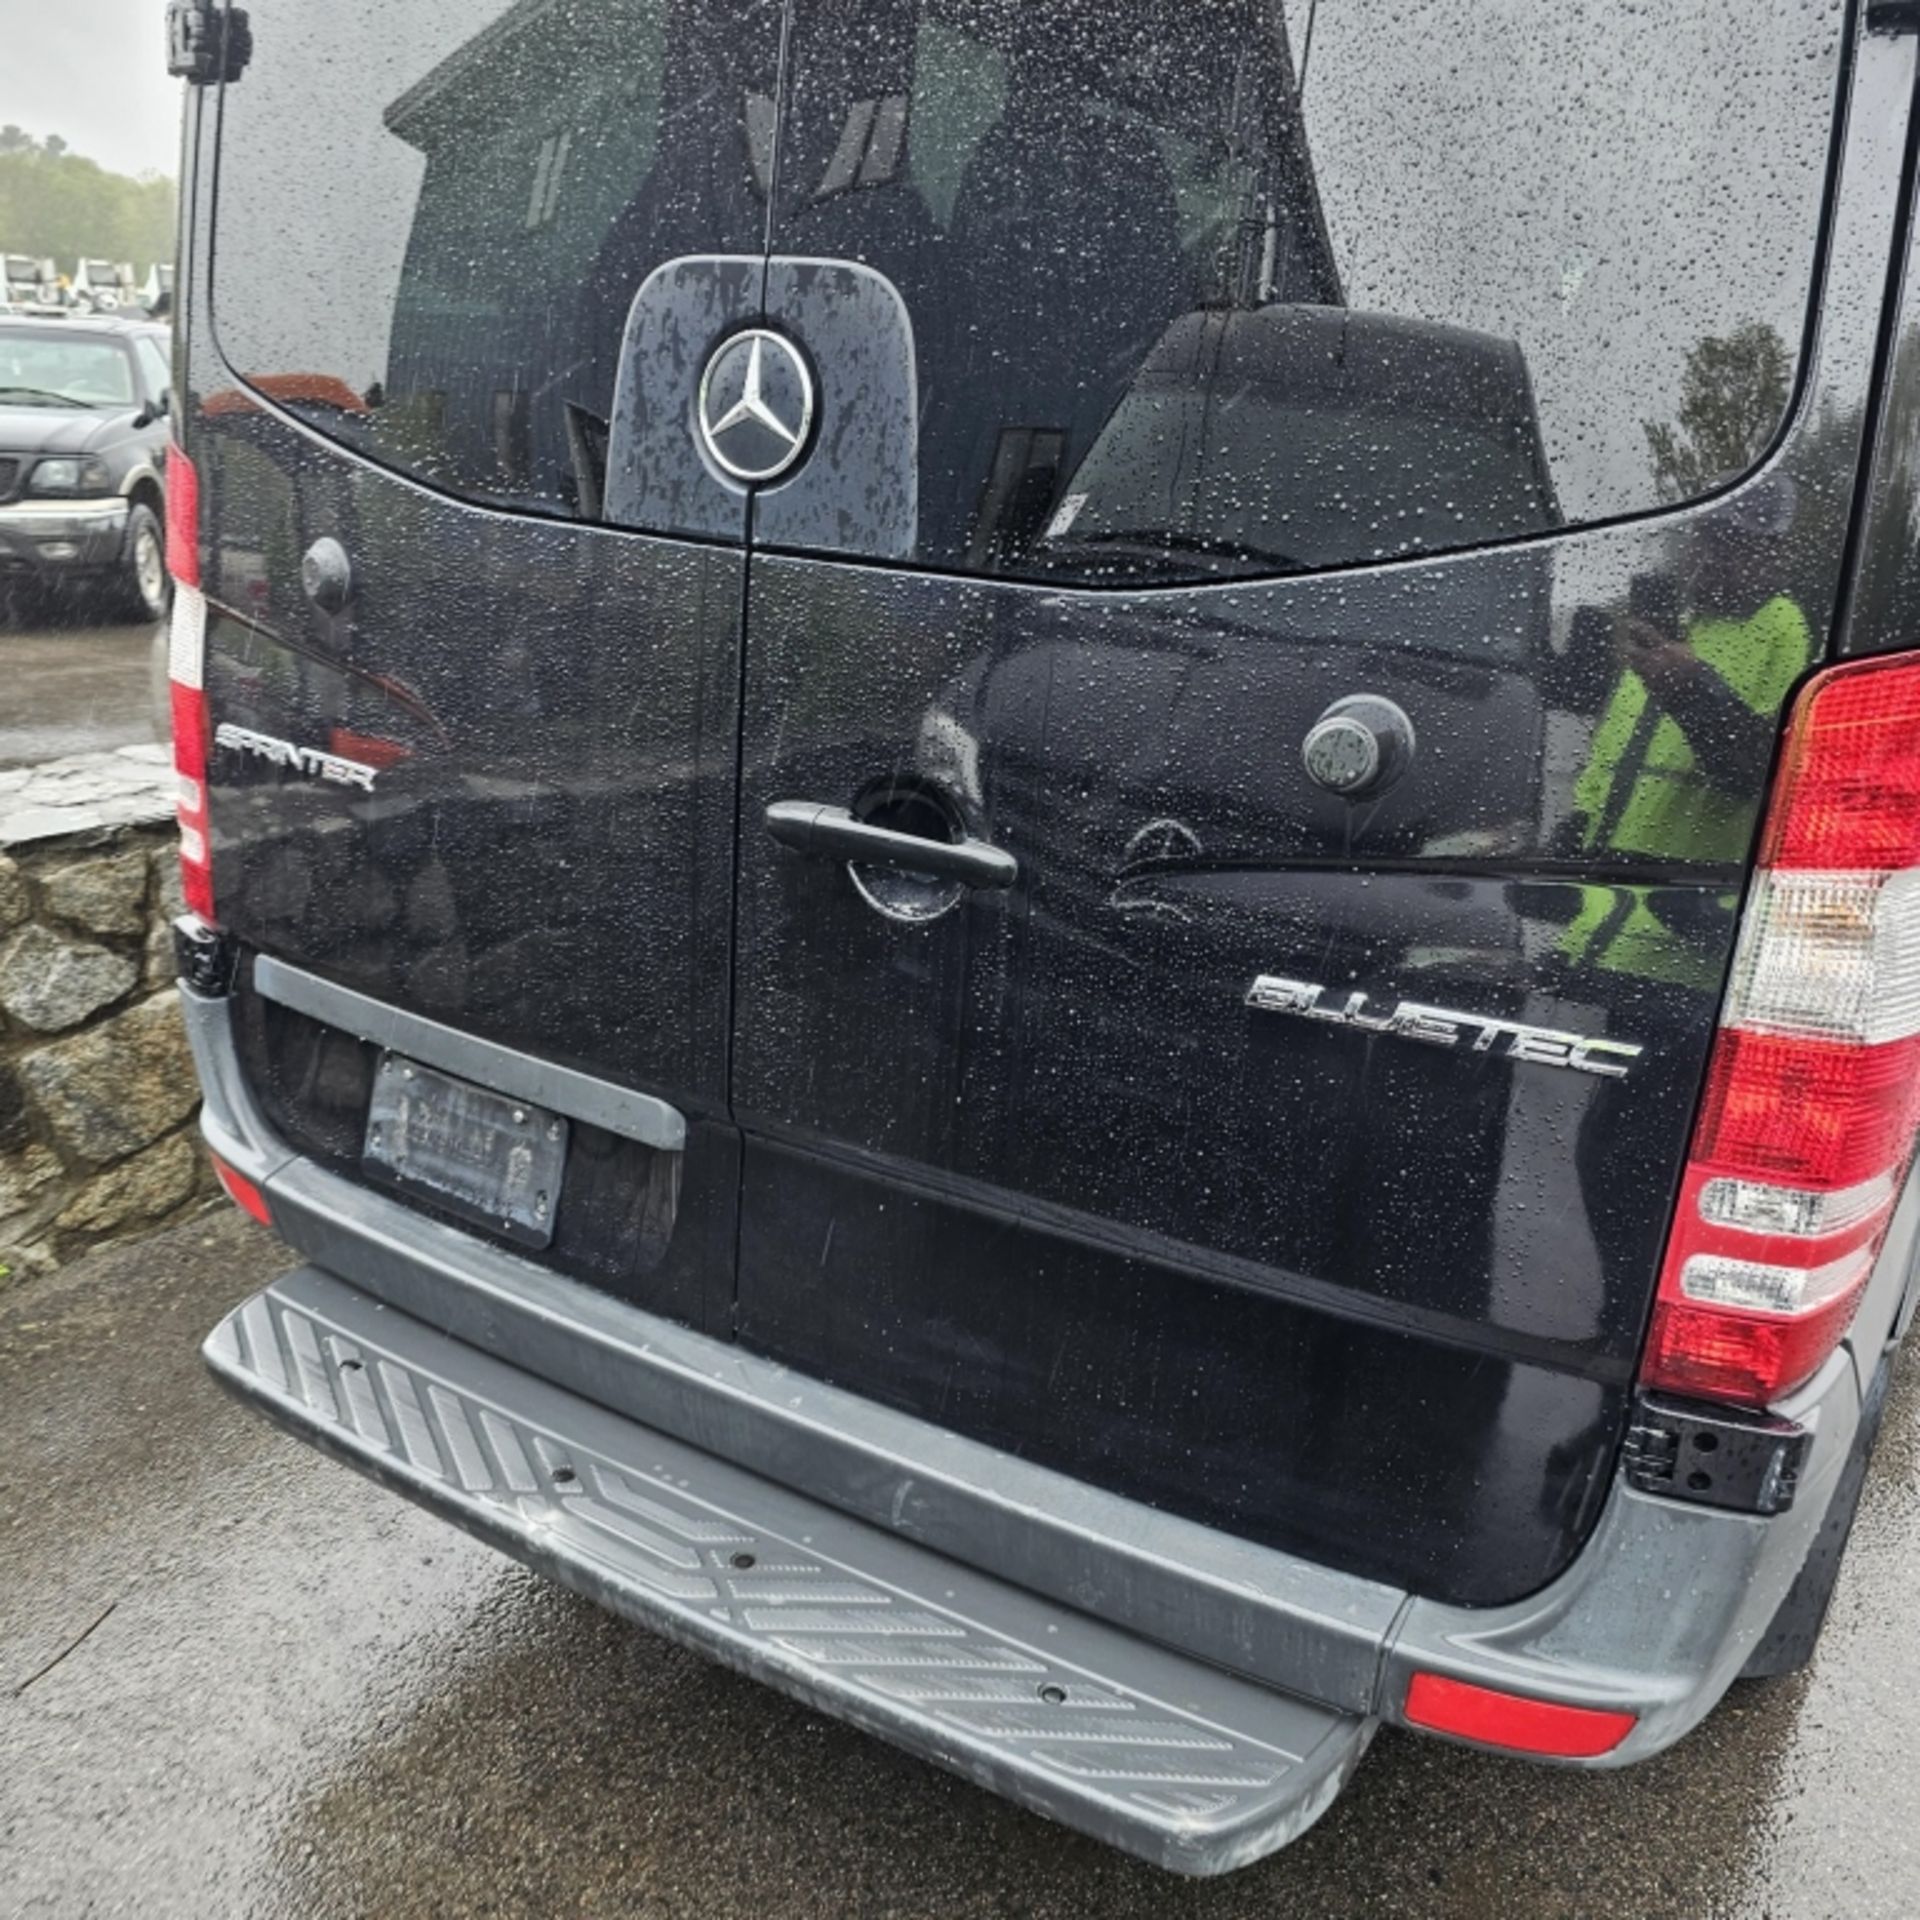 2017 Mercedes Sprinter Passenger Van - Image 6 of 9